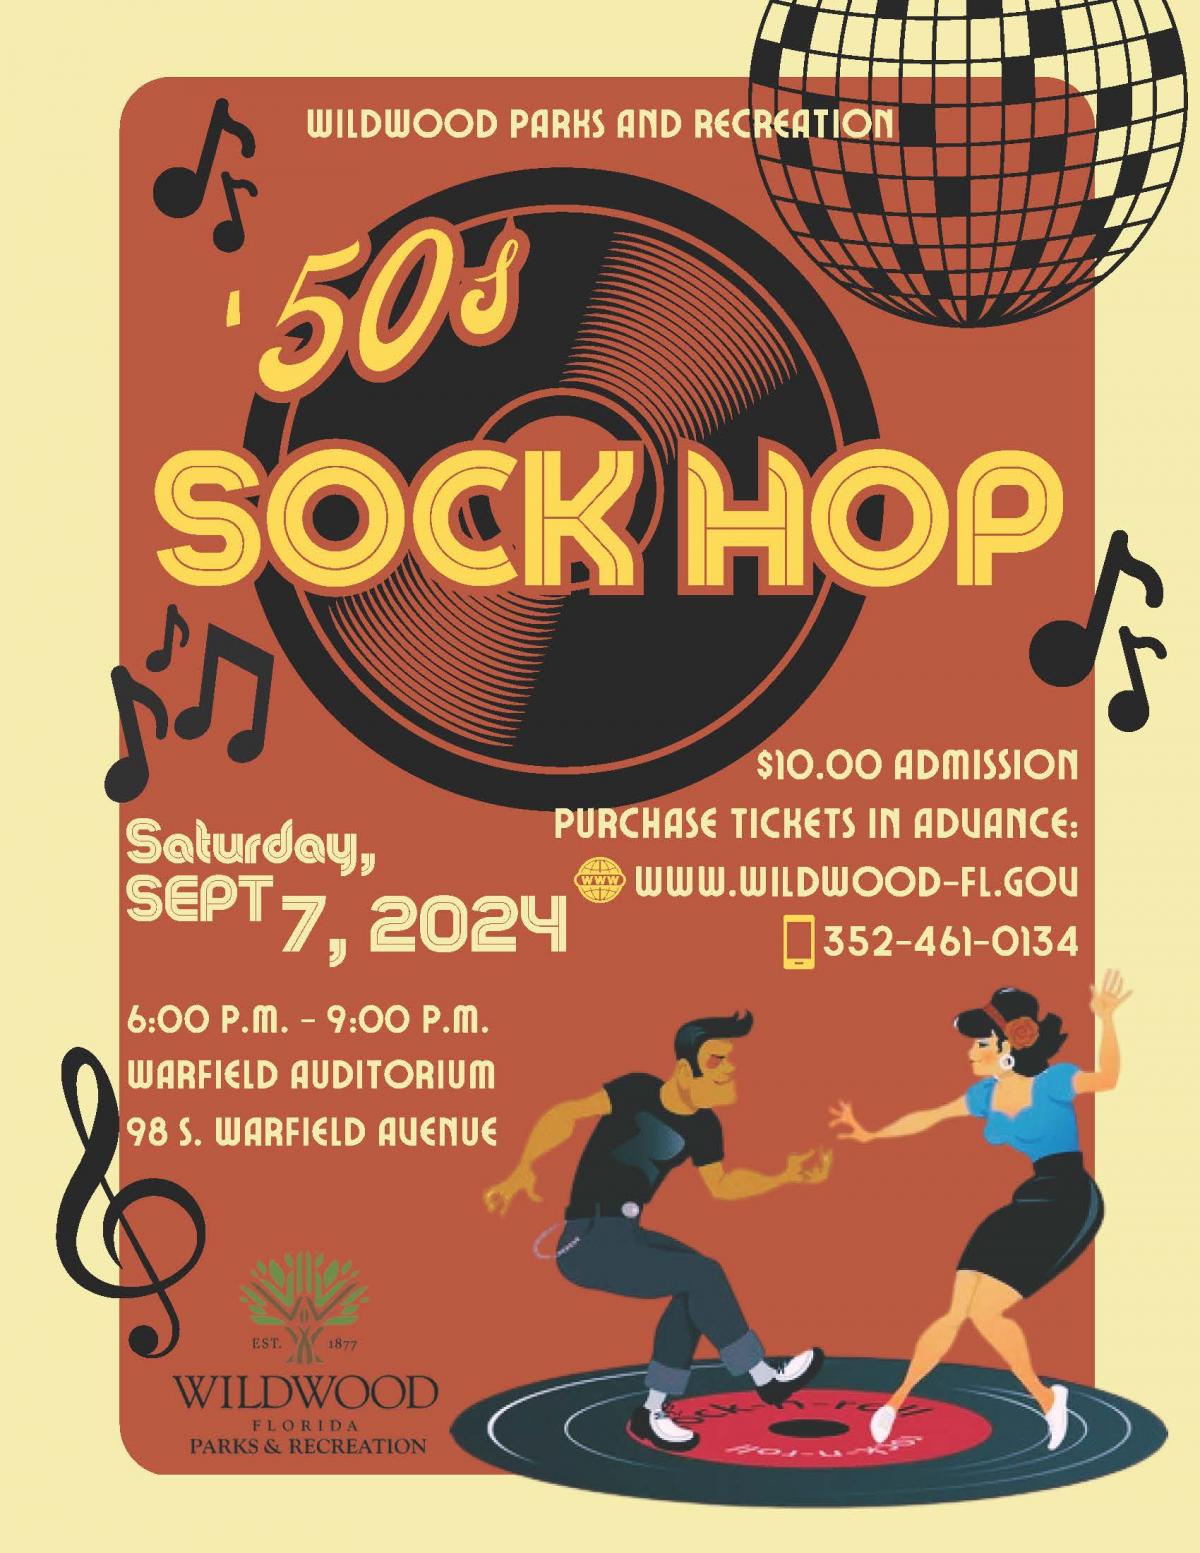 City of Wildwood 50s Sock Hop, Warfield Auditorium, 98 S. Warfield Ave, Wildwood, Fl 34785, 6:00 p.m. - 9:00 p.m. 